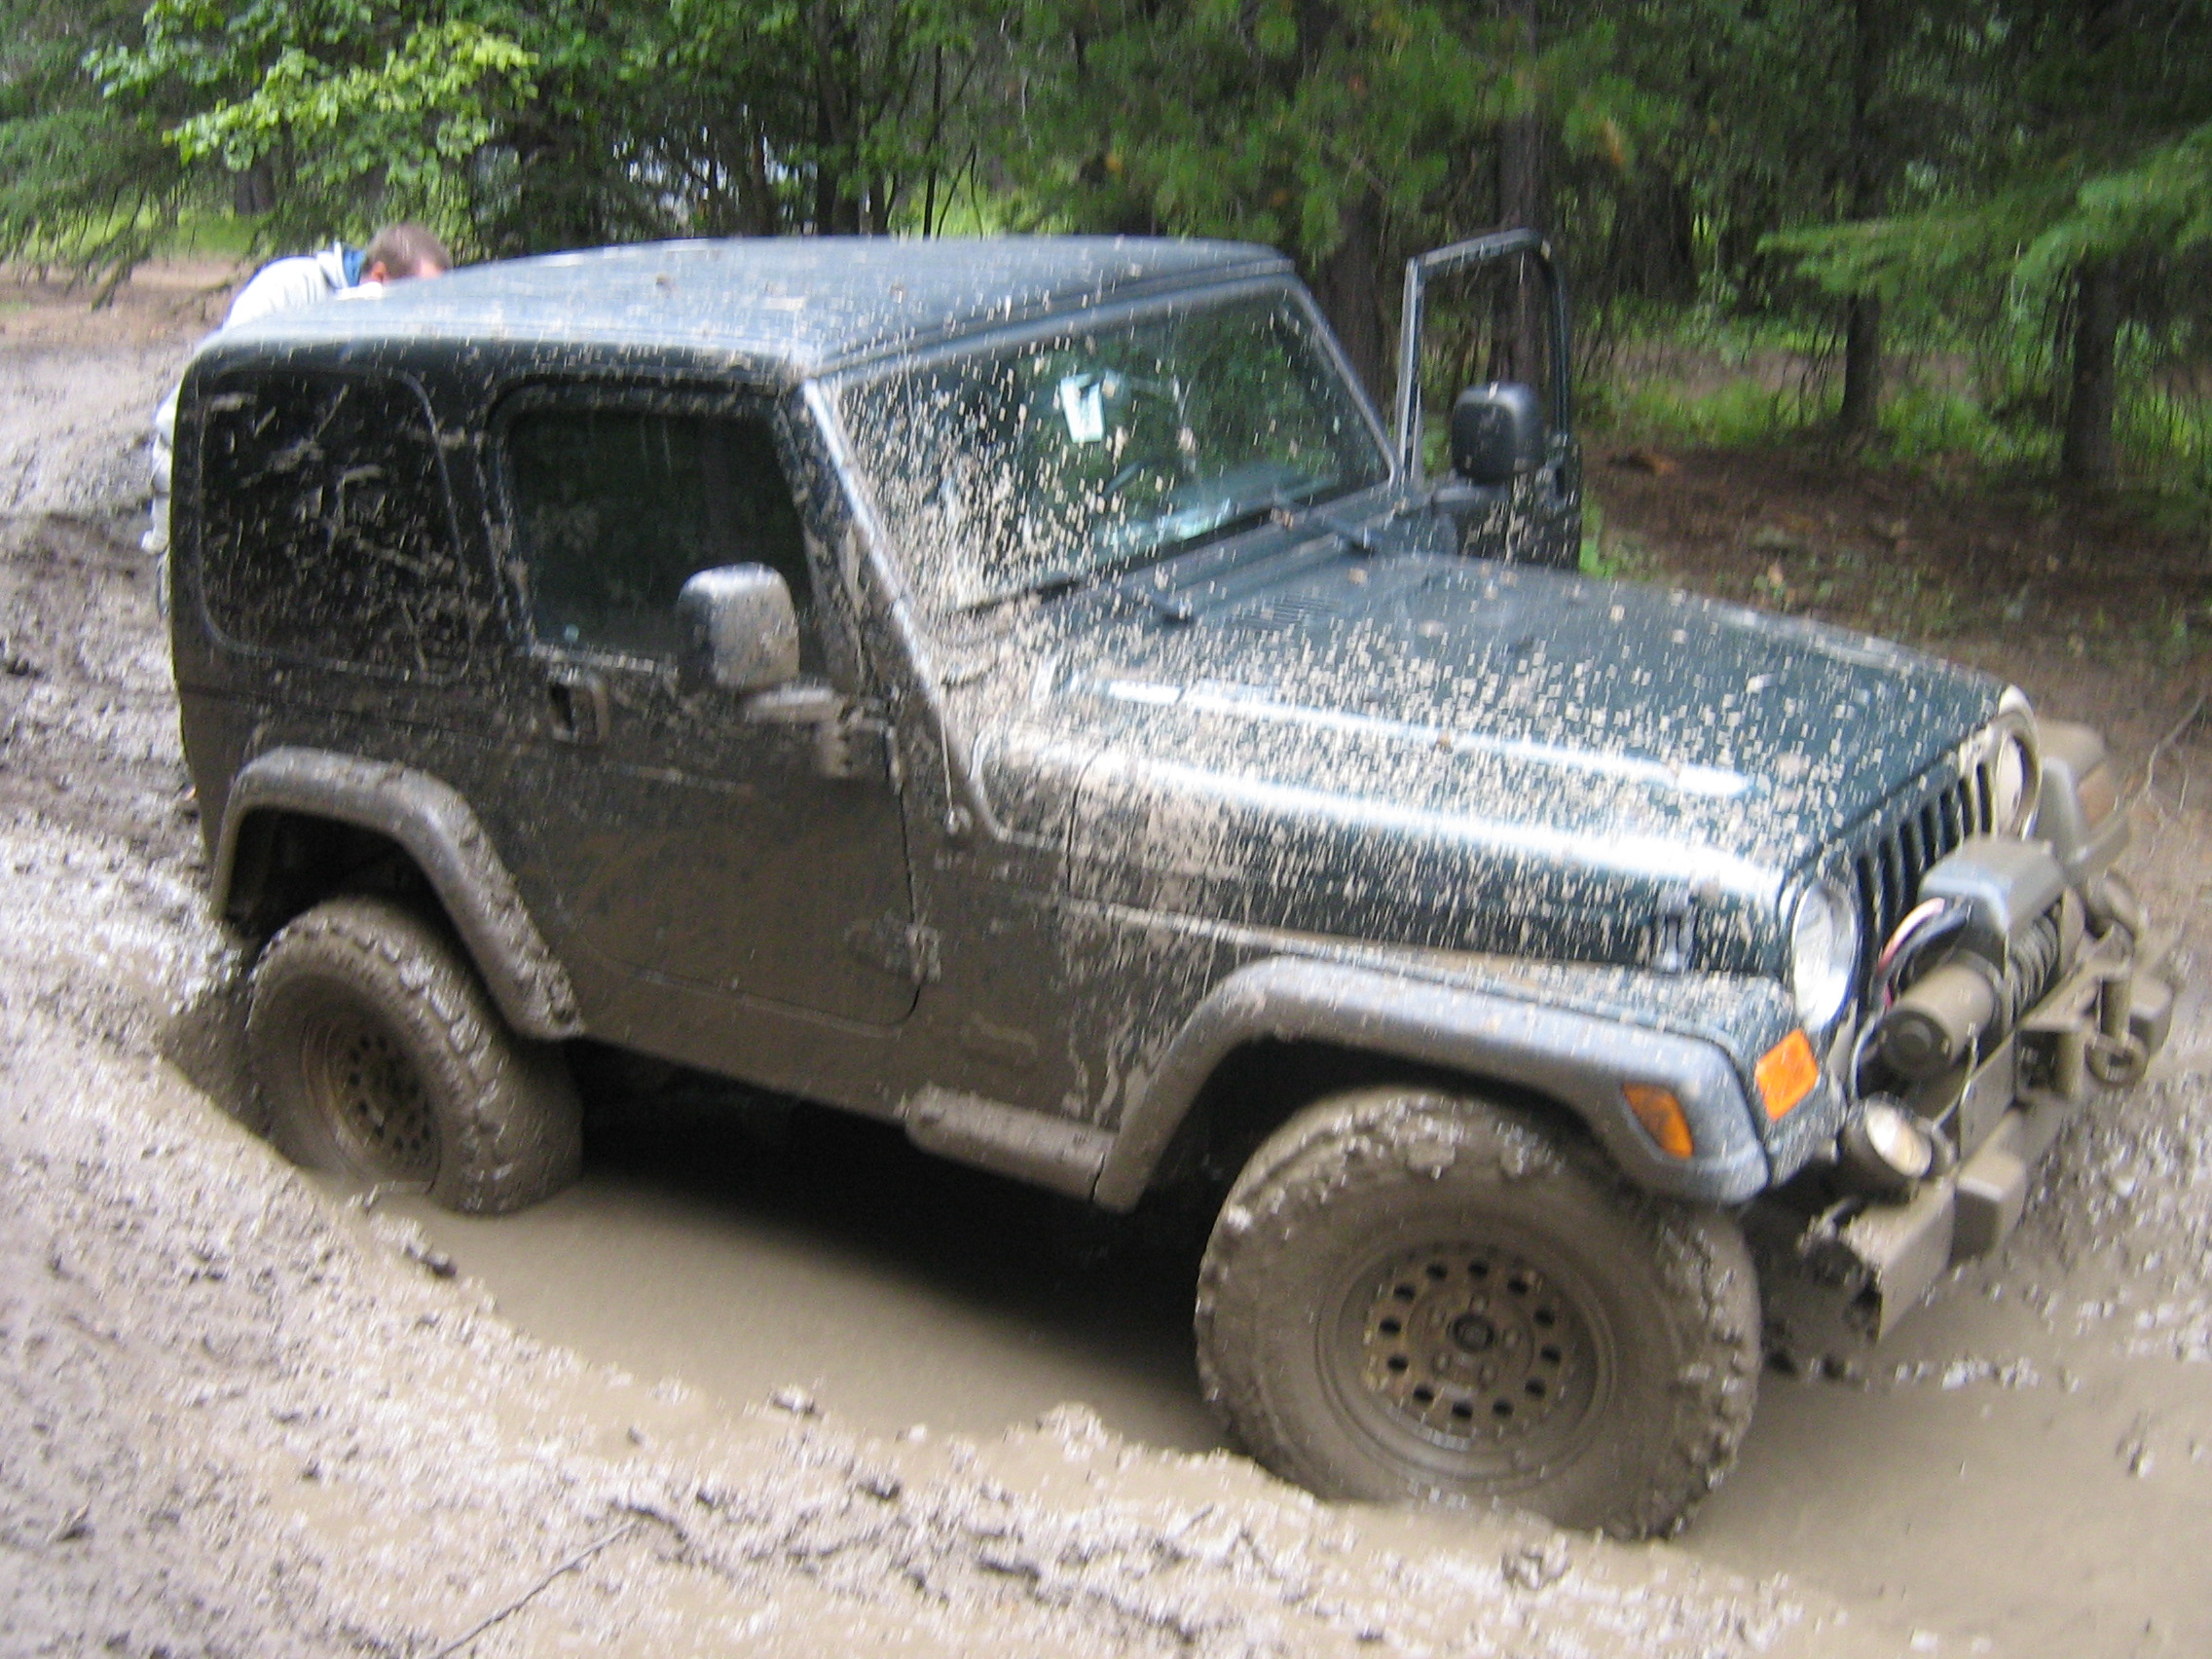 File:Jeep Wrangler in mud (2820337710).jpg - Wikimedia Commons